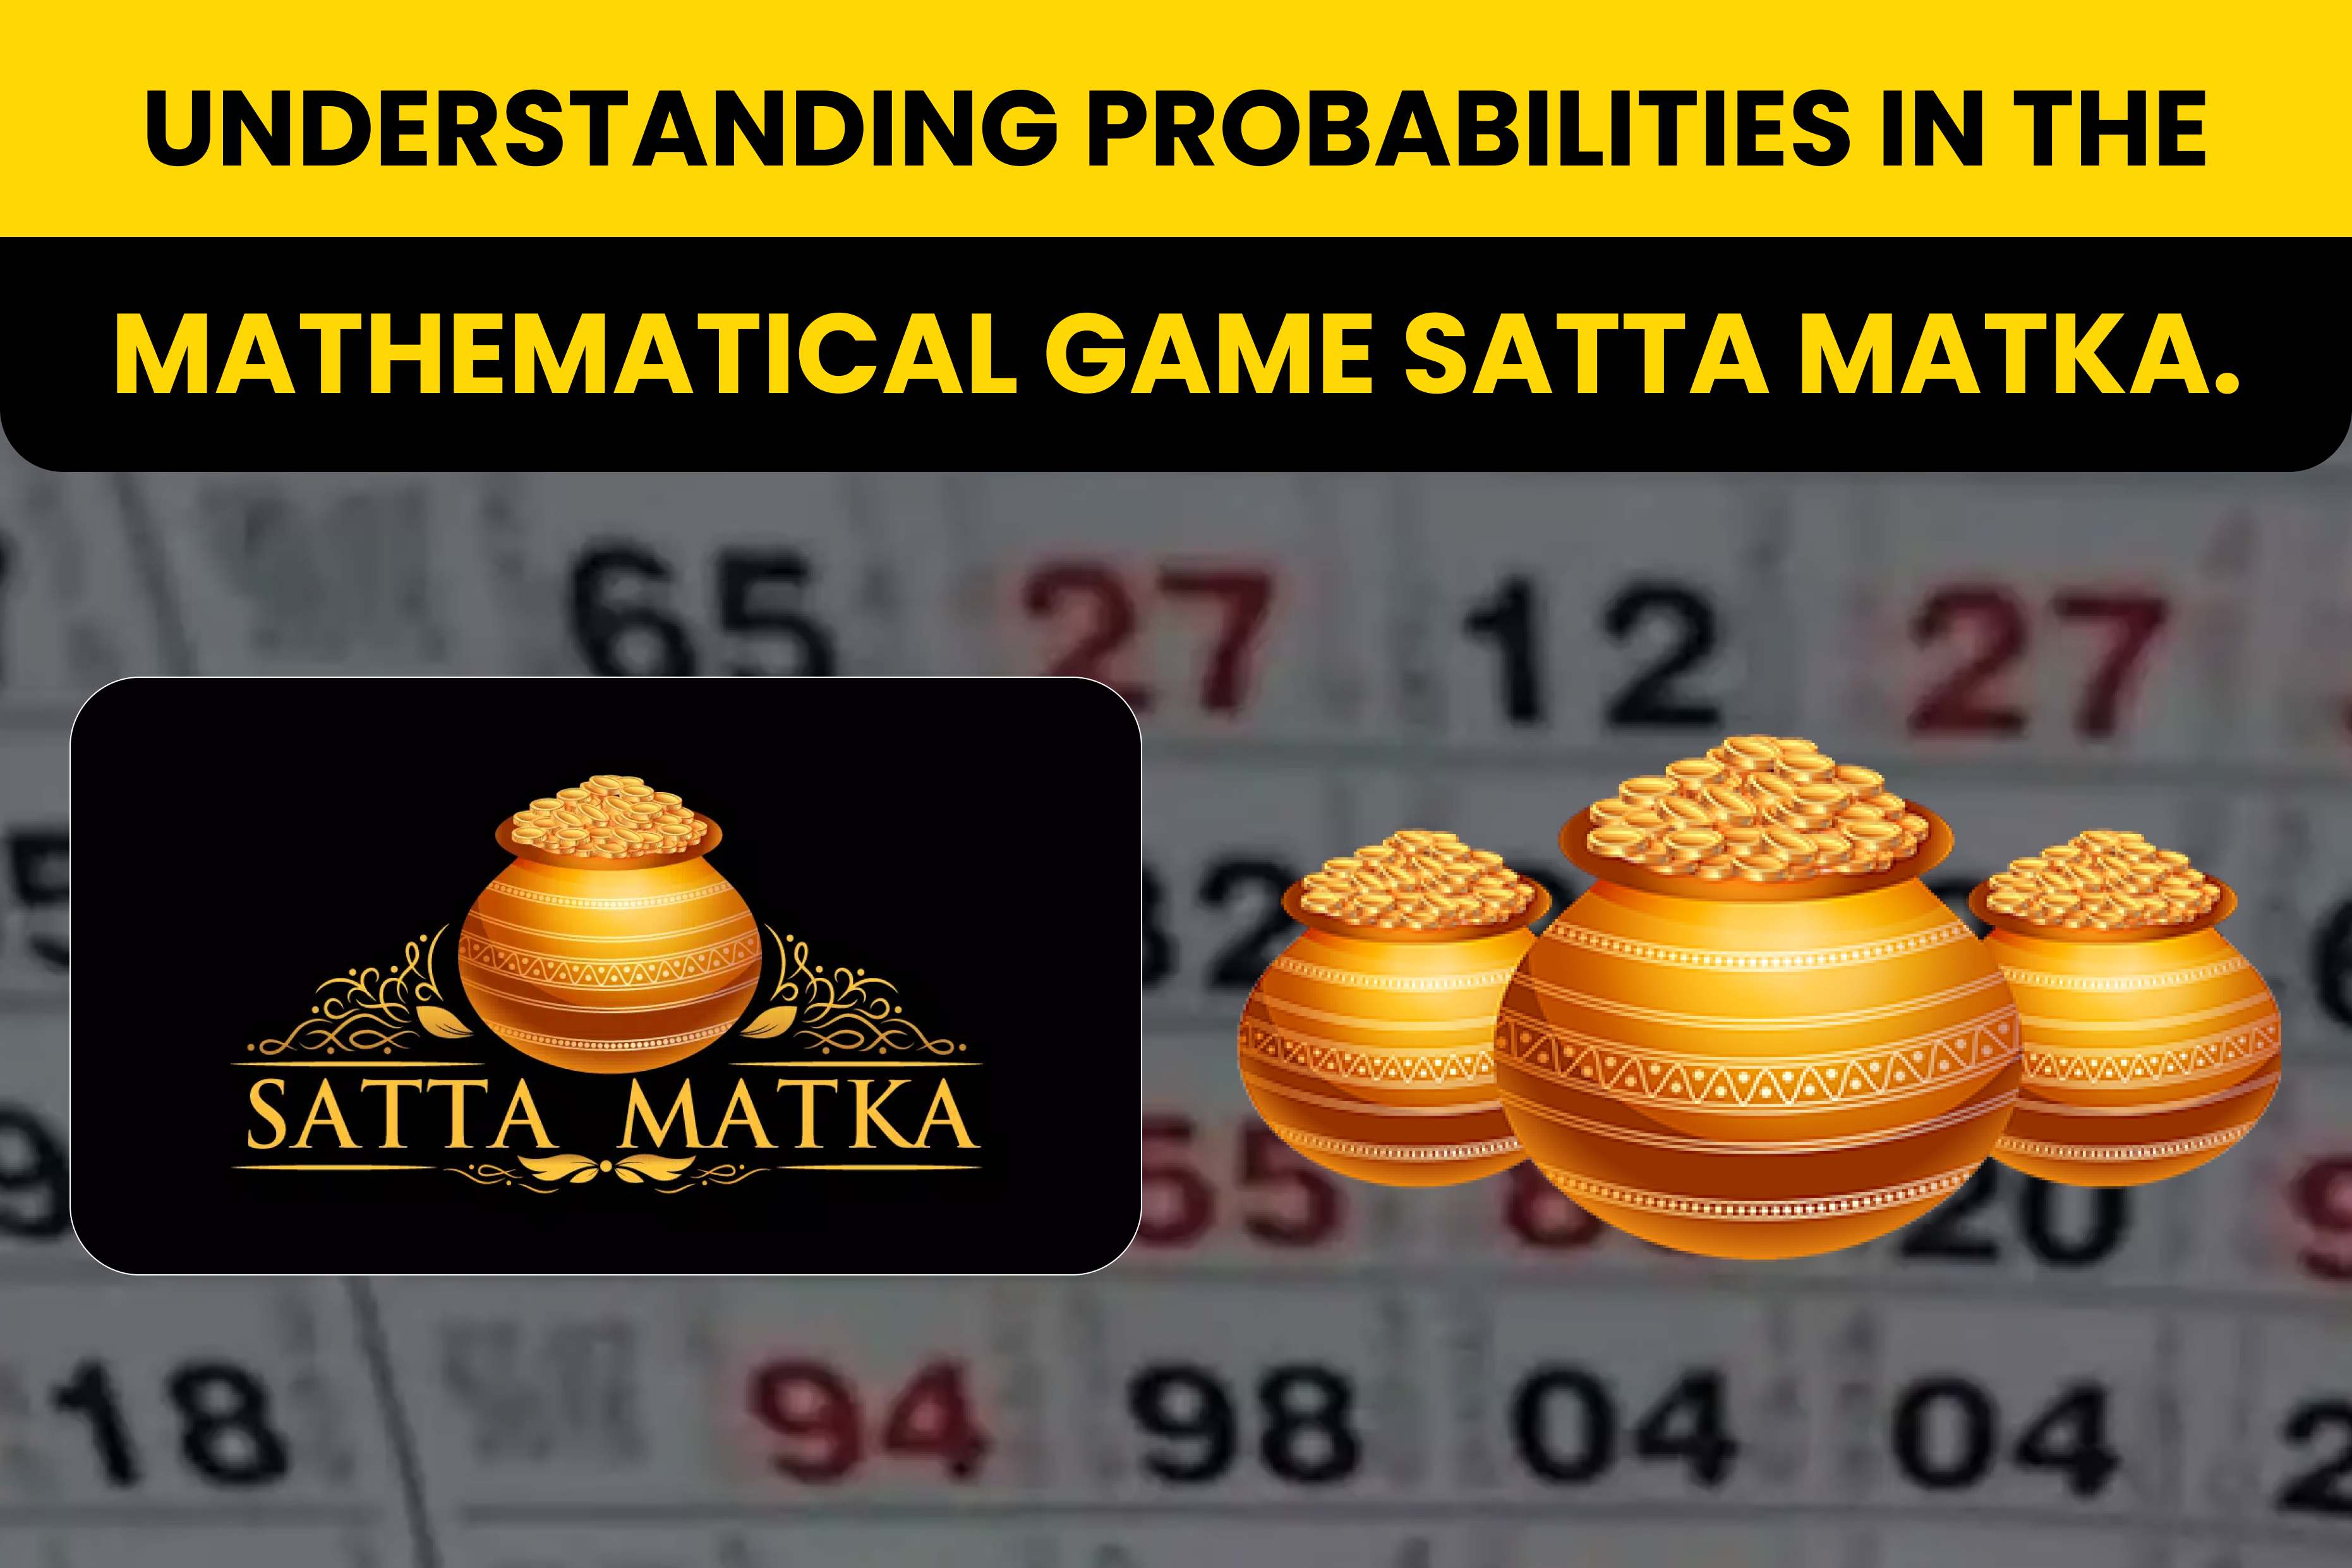 Understanding probabilities in the mathematical game Satta Matka.